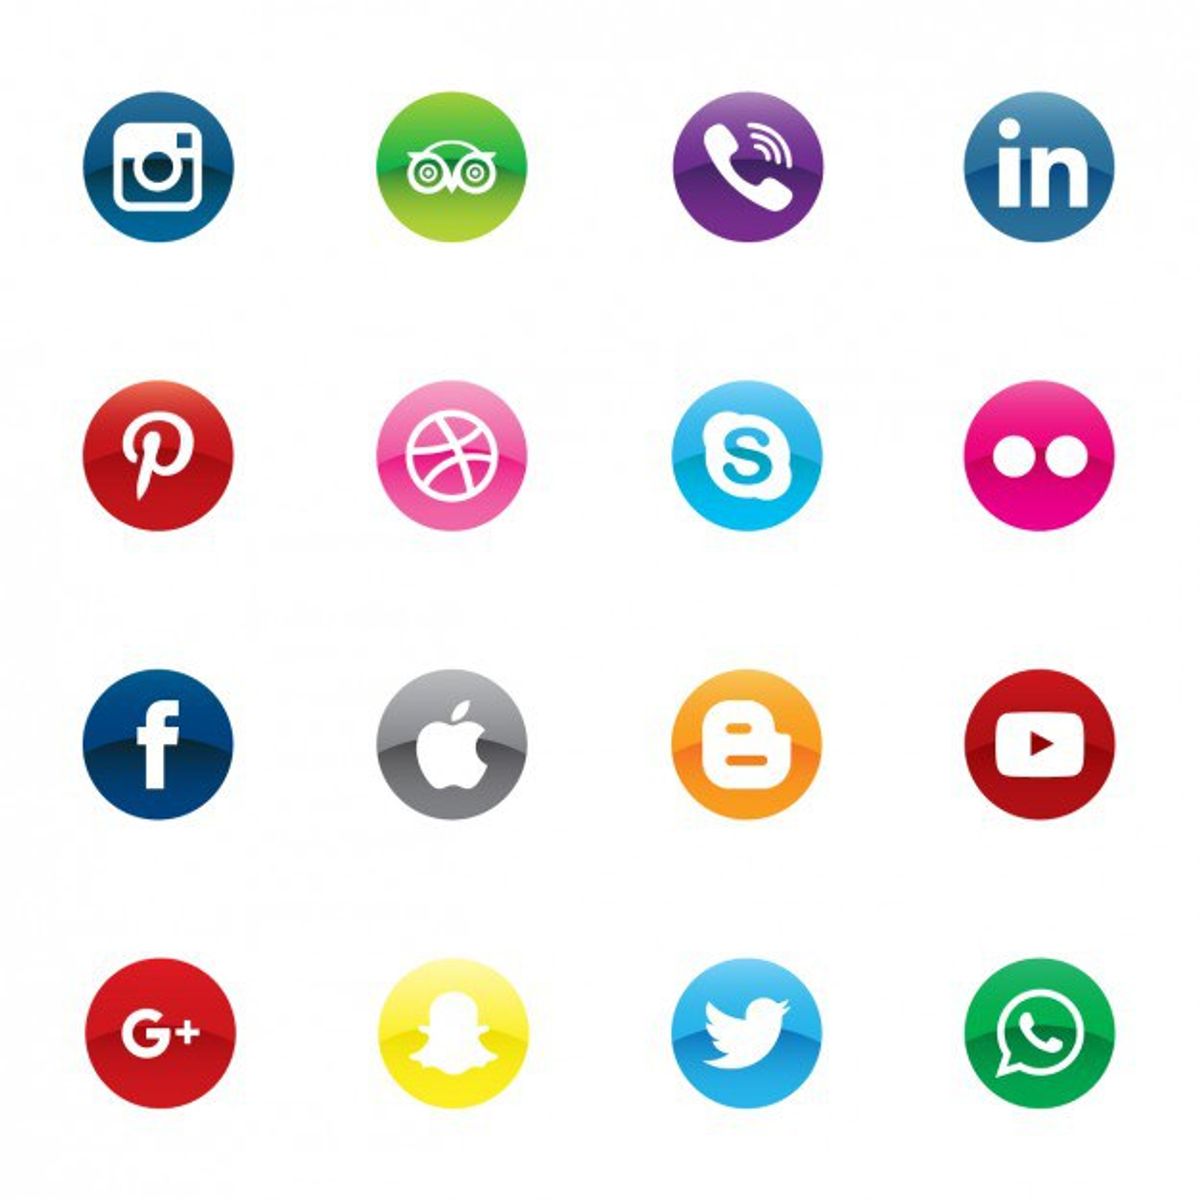 Can I Guess Your Favorite Social Media Platform?